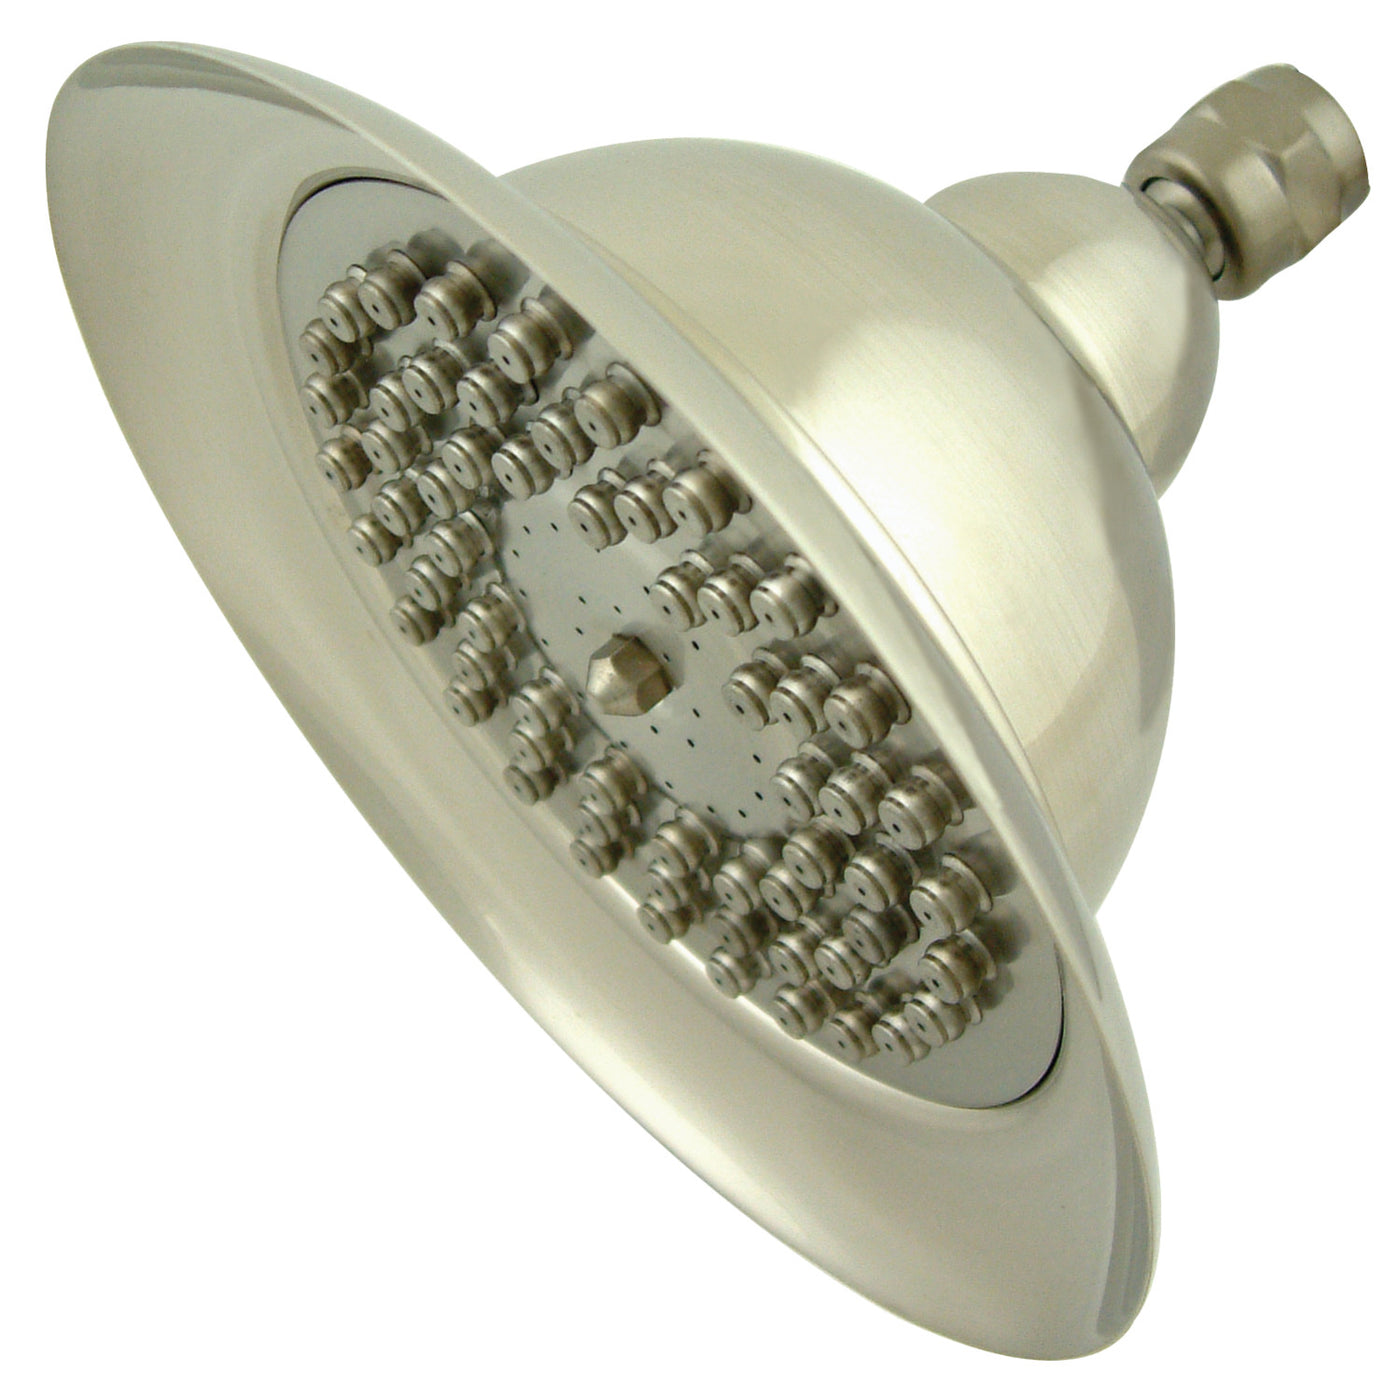 Elements of Design DK306C8 6-Inch Bell-Shaped Brass Shower Head, Brushed Nickel